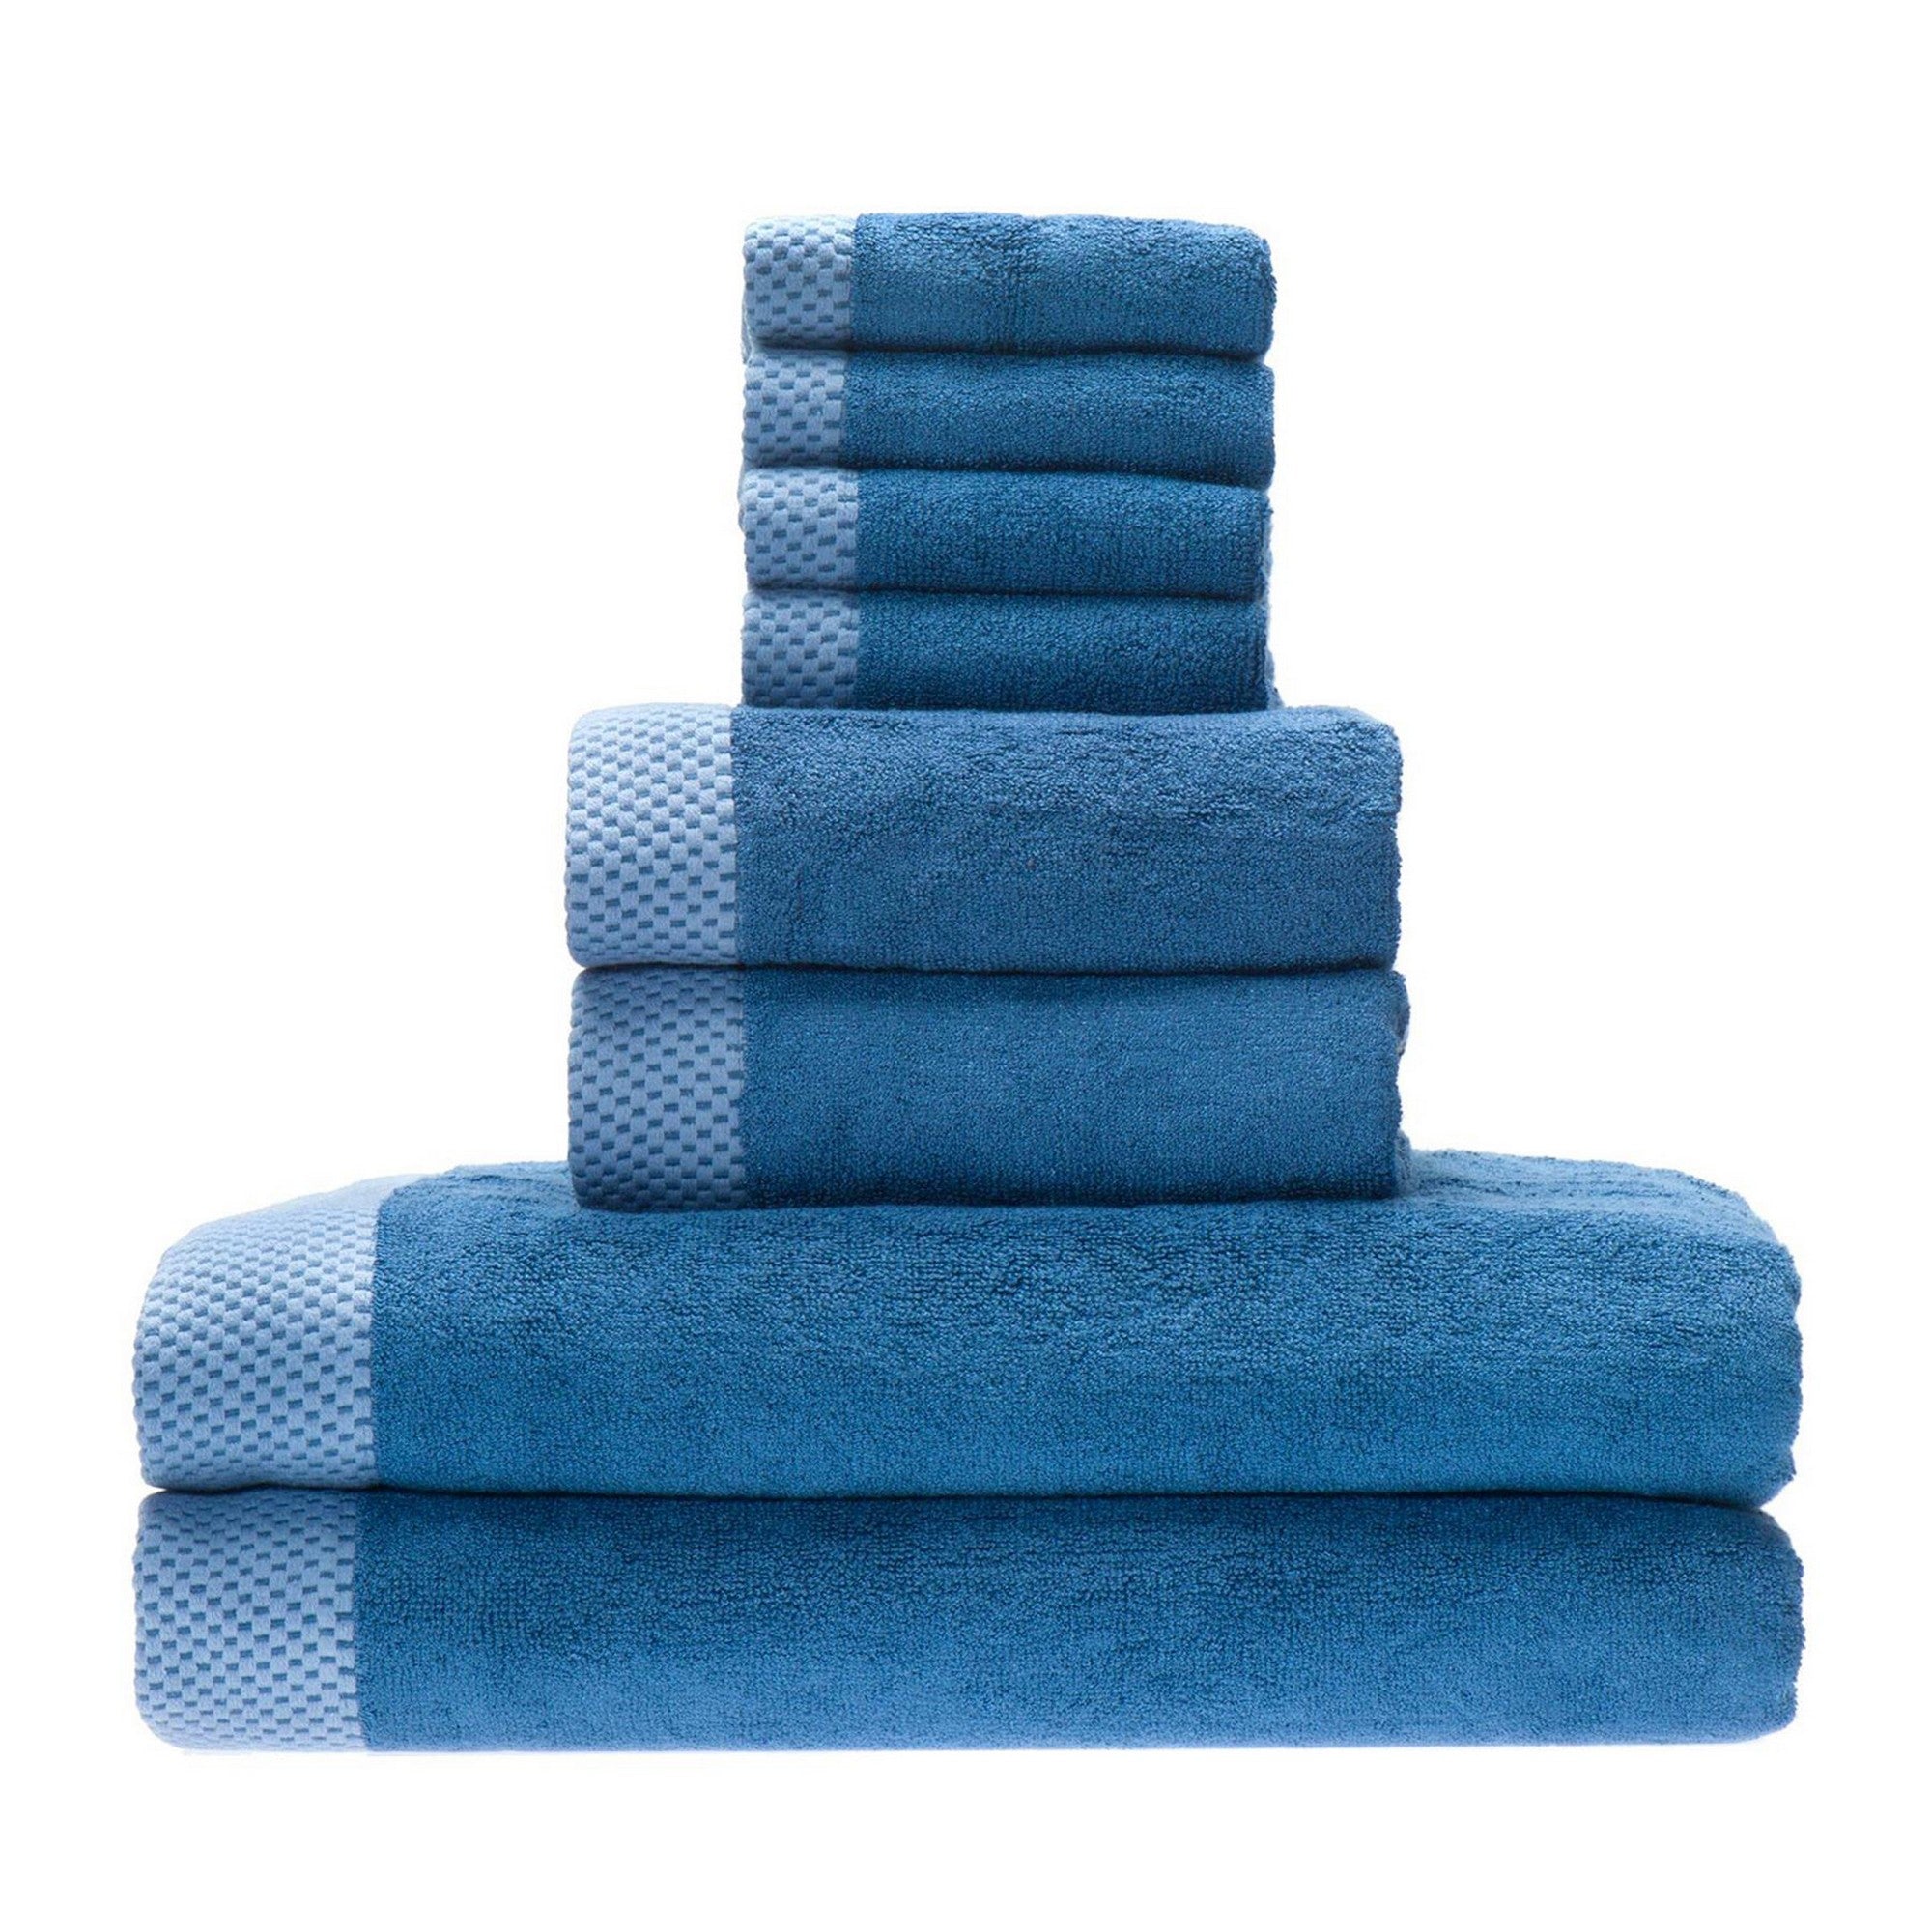 stack of dark blue indigo bamboo towels with bath hand and washcloths